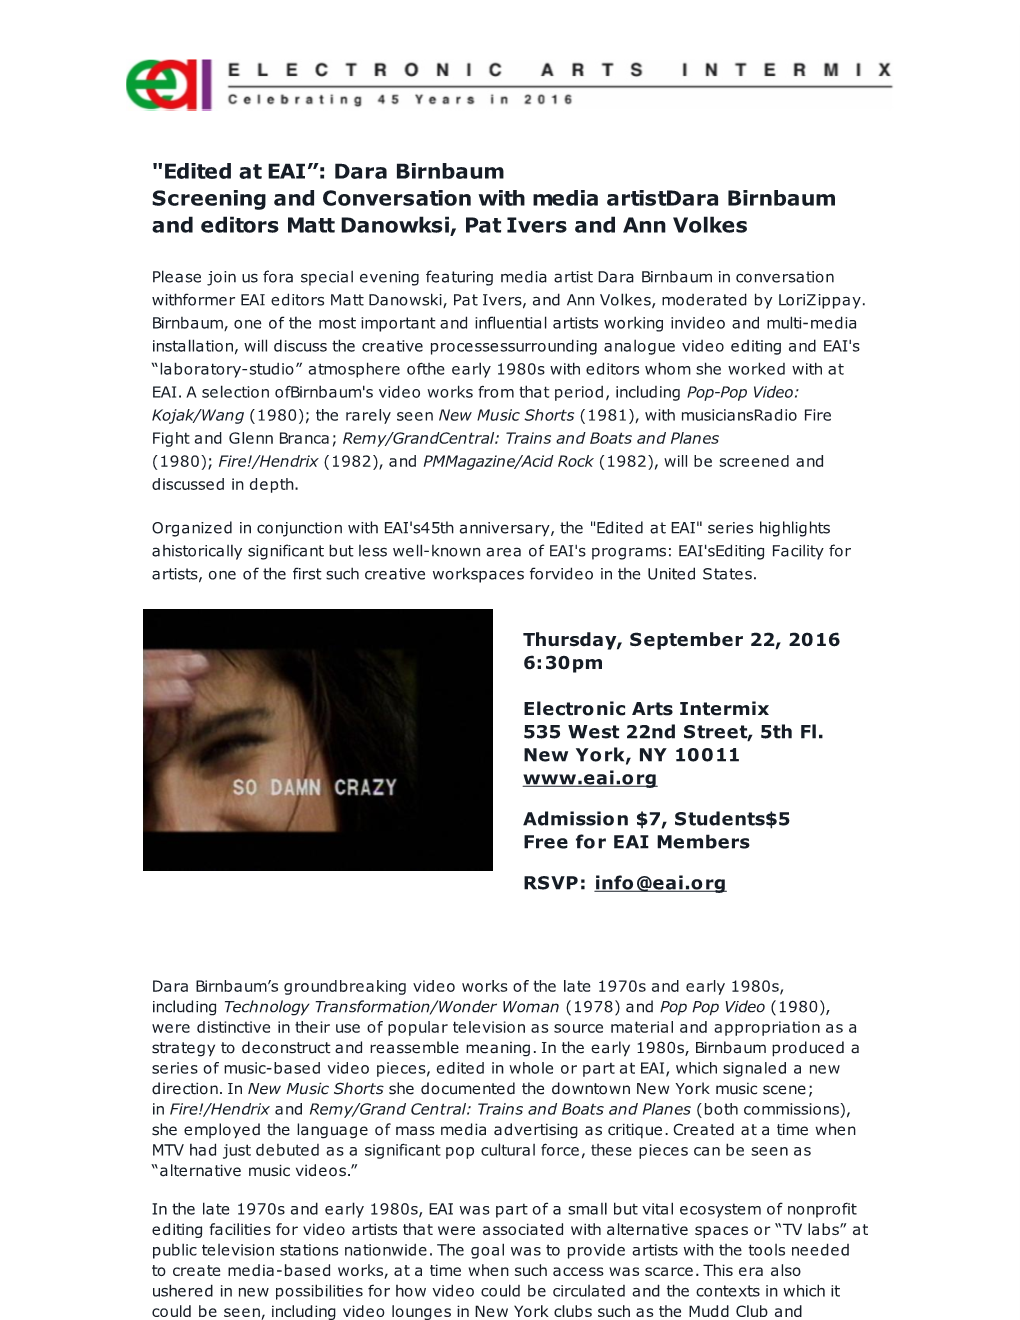 Edited at EAI”: Dara Birnbaum Screening and Conversation with Media Artistdara Birnbaum and Editors Matt Danowksi, Pat Ivers and Ann Volkes